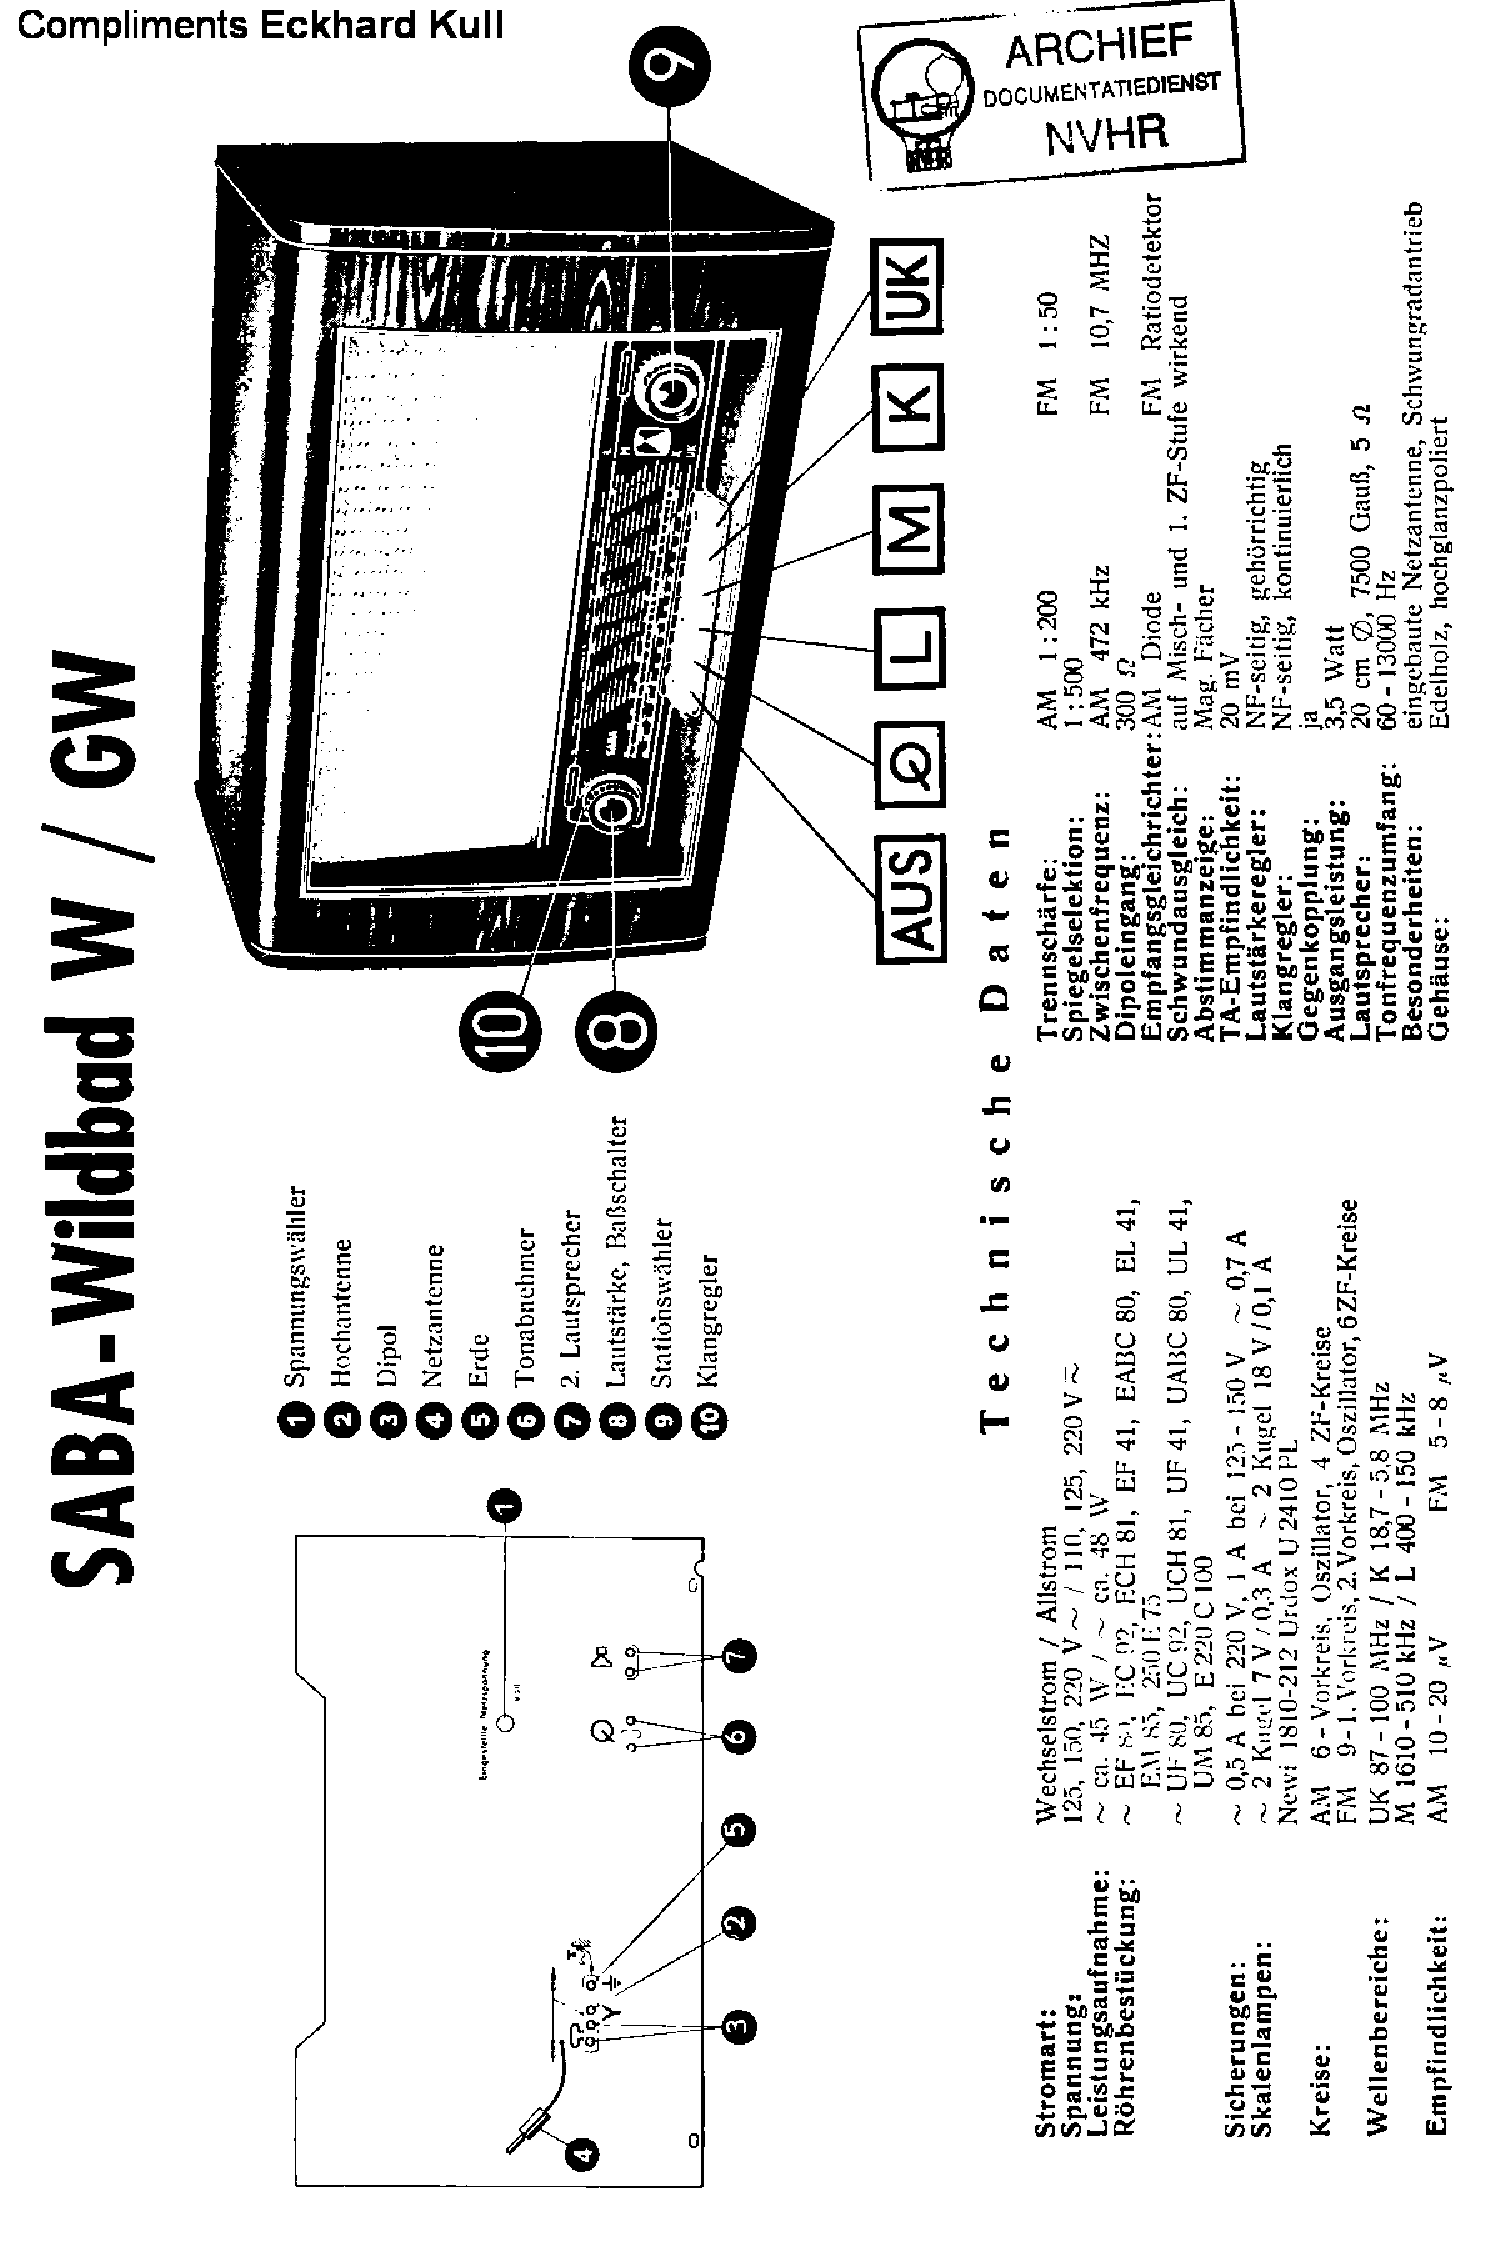 SABA WILDBAD-W-GW AM-FM RECEIVER 1952 SM service manual (1st page)